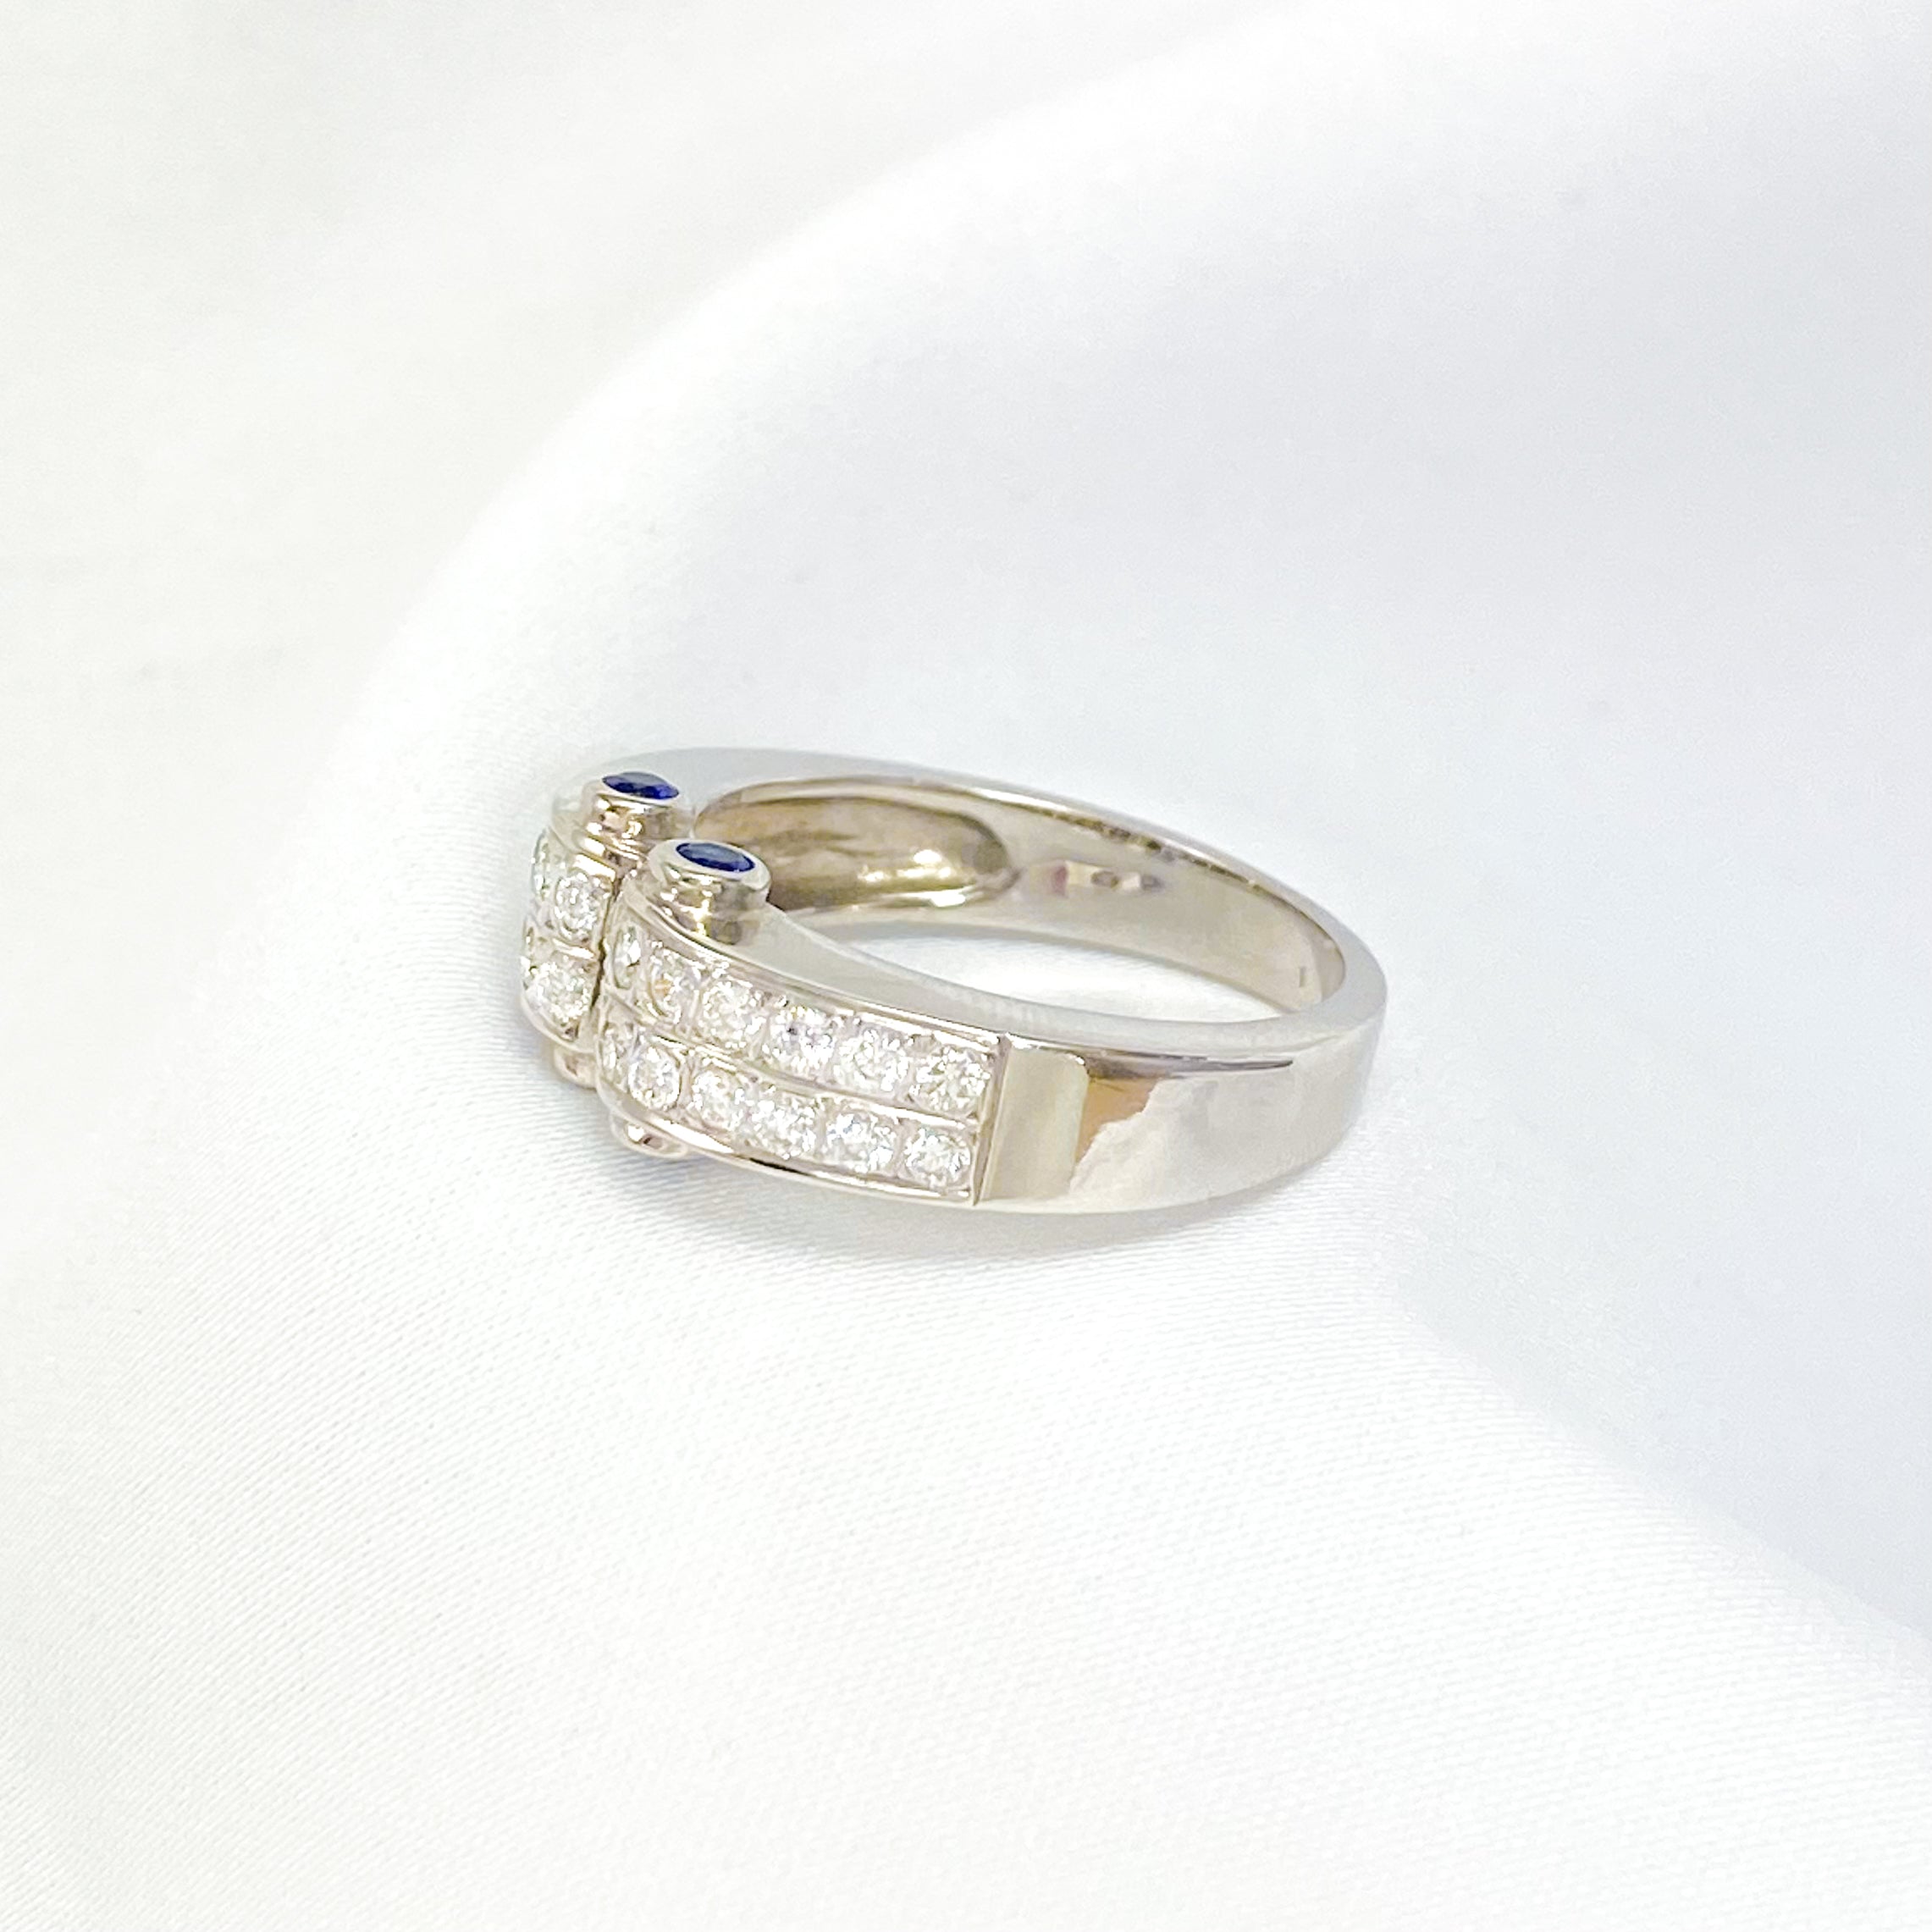 Double Diamond Arche Ring in white gold